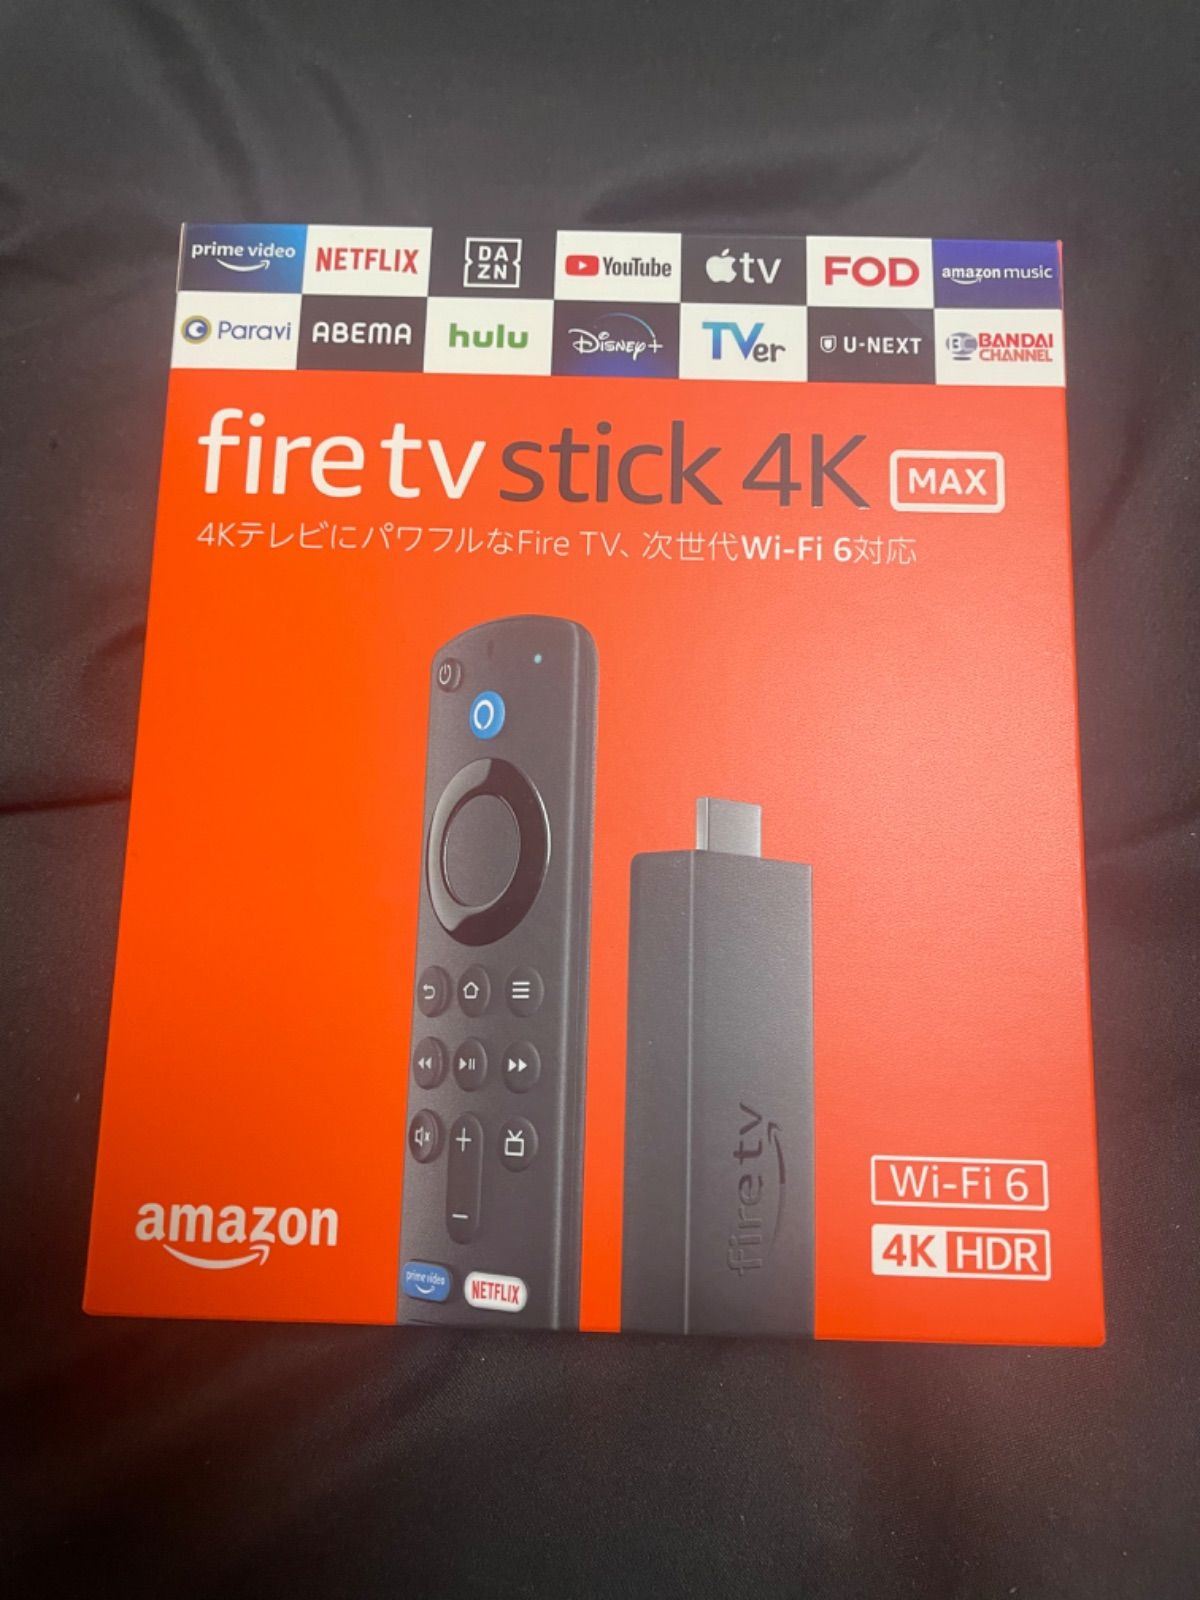 超熱 新品、未使用 Amazon Fire TV Stick 4K Max その他 - asiatech.co.id asiatech.co.id